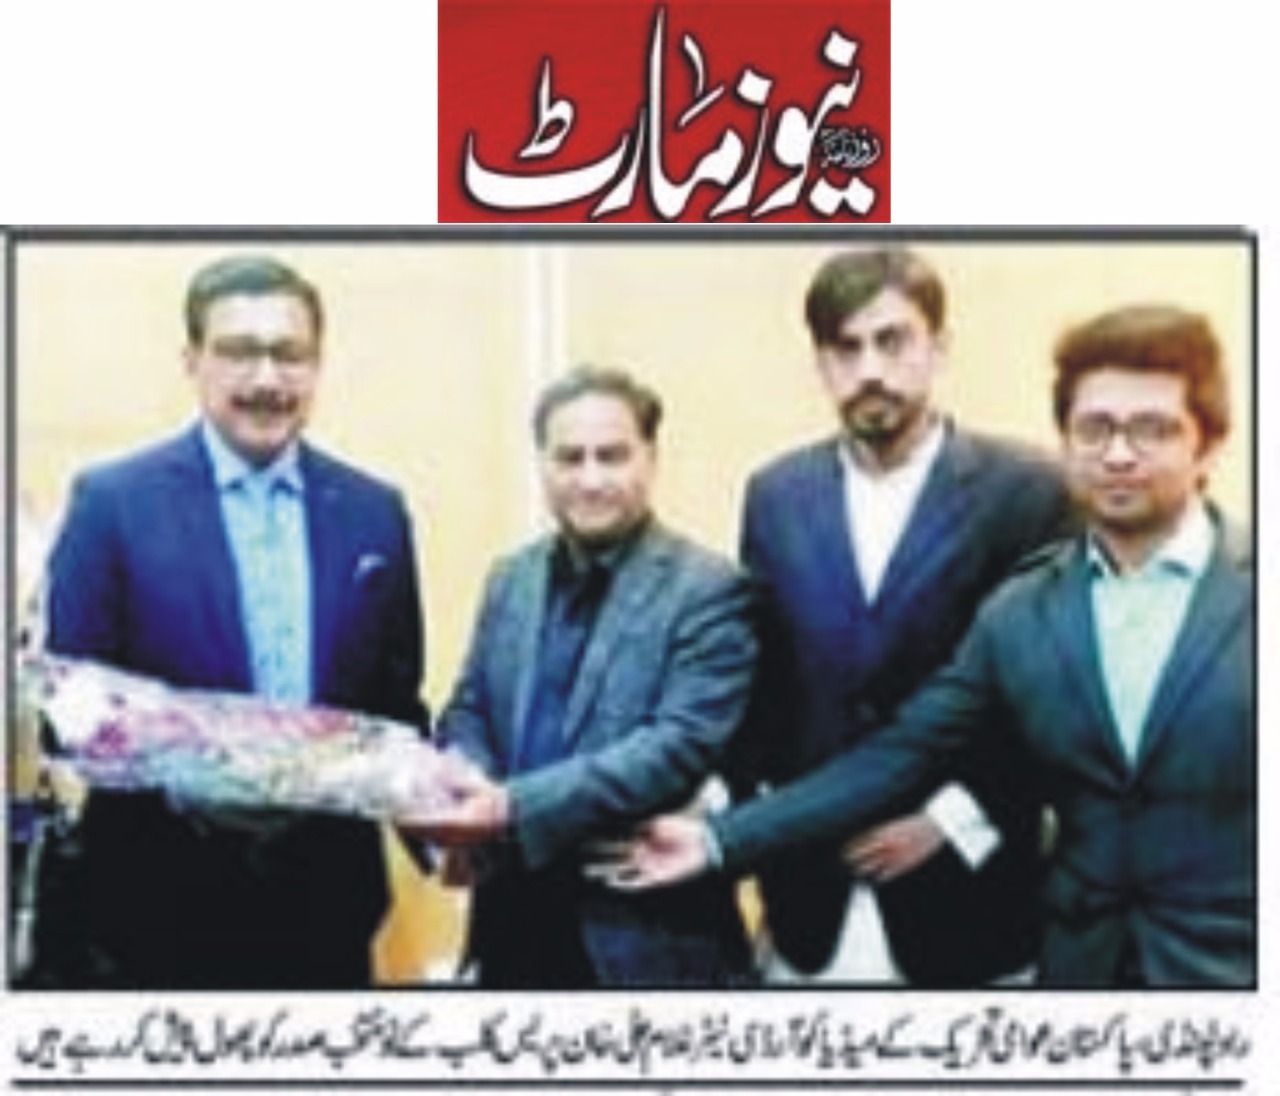 Pakistan Awami Tehreek Print Media CoverageDaily Newsmart Page 2